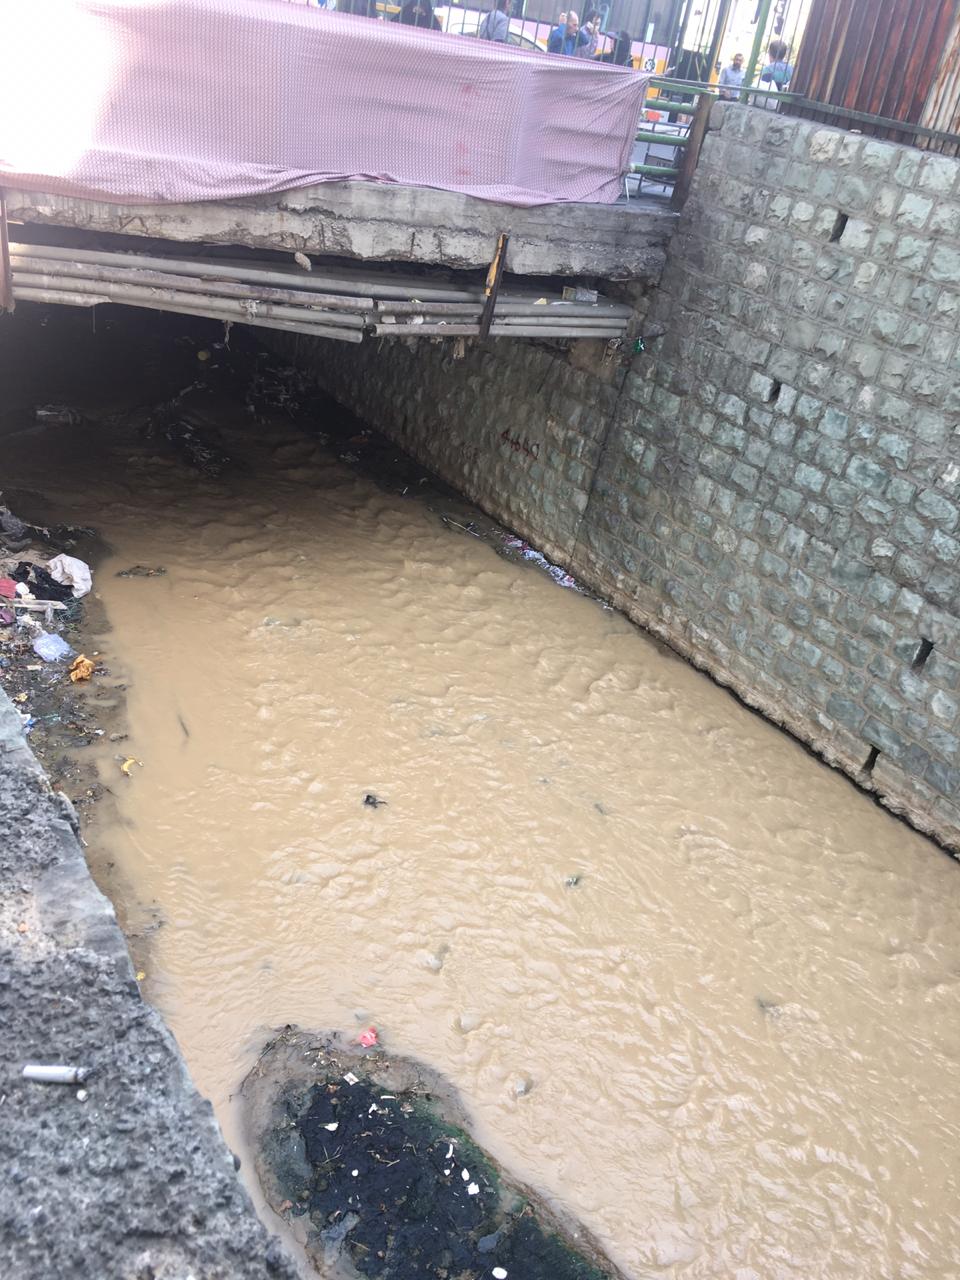 کانال آب محله صادقیه رفع خطر شد